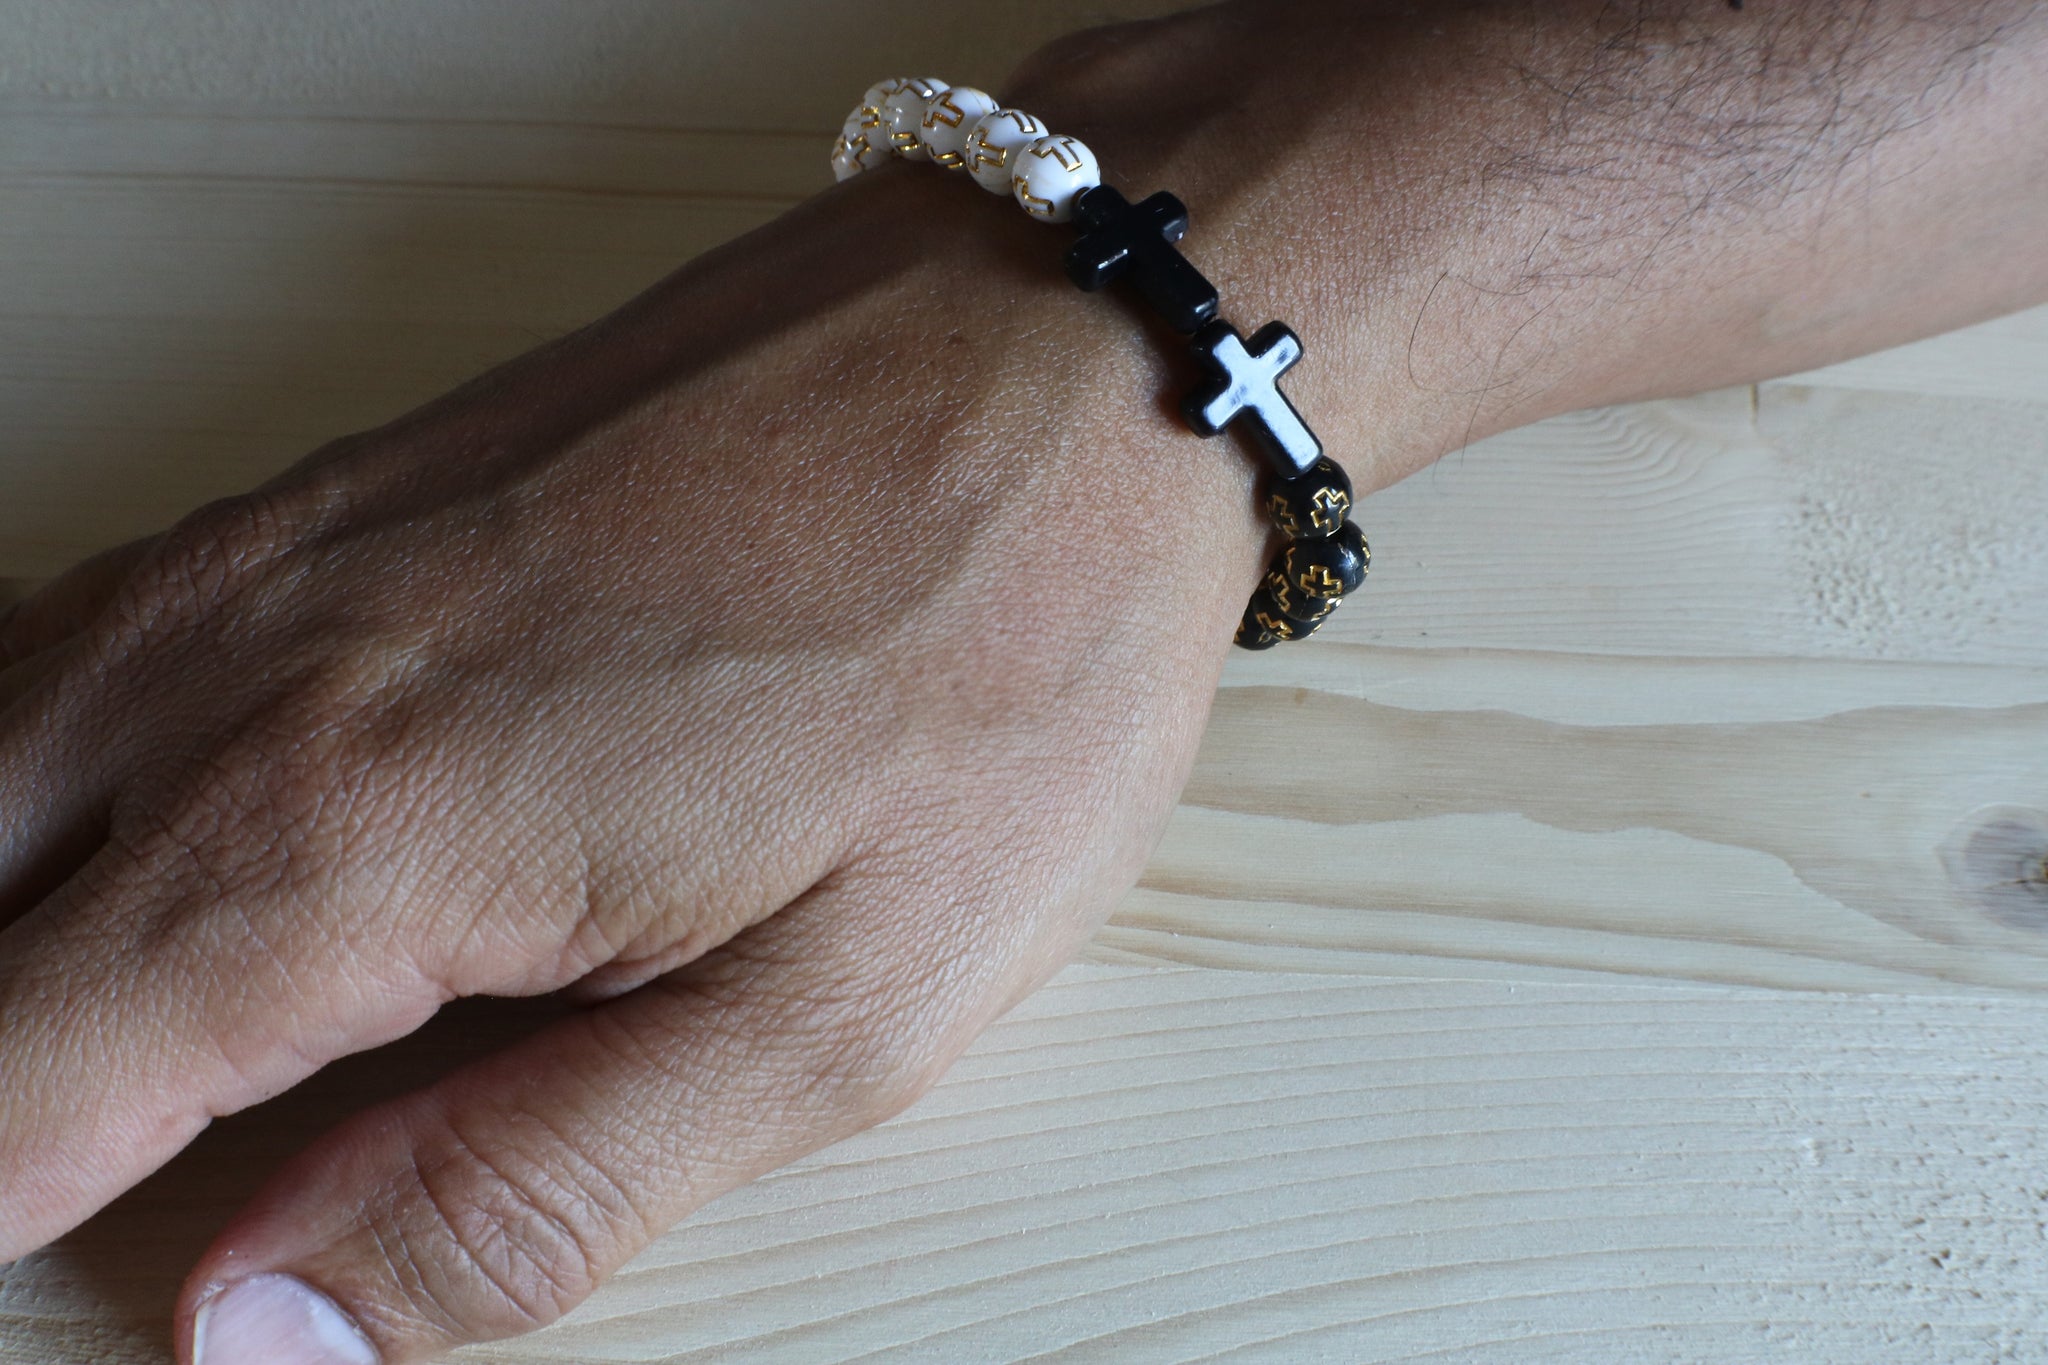 Amazon.com: Cross bracelet for men, groomsmen gift, men's bracelet with a  silver cross pendant, black cord, gift for him, christian catholic jewelry  : Handmade Products